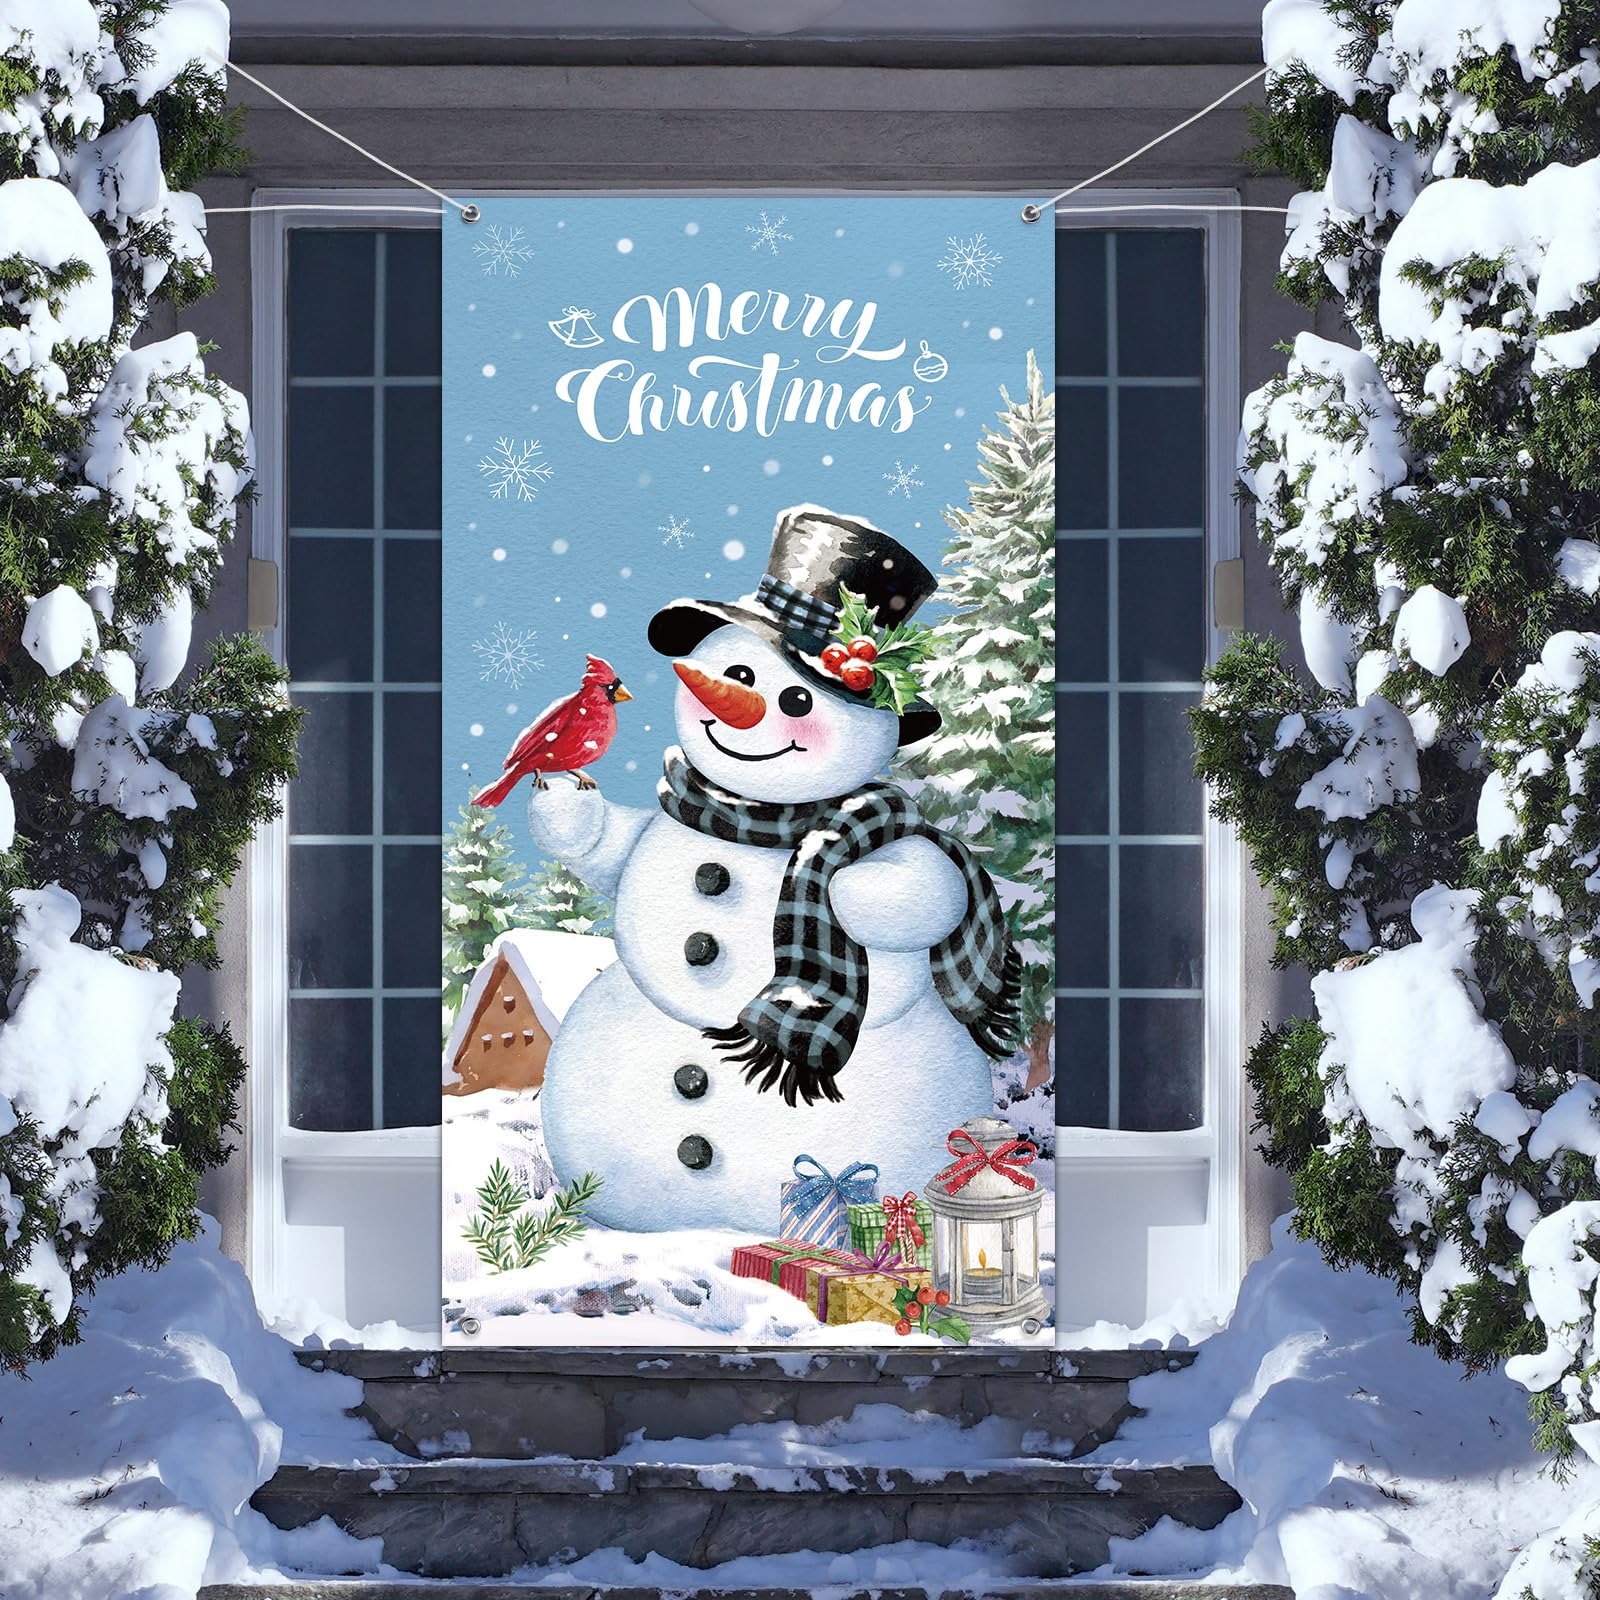 Christmas Snowman Door Cover Merry Christmas Door Decorations Winter Snowman Backdrop Background Banner for Front Door Porch Xmas Party Decor Supplies (Blue)